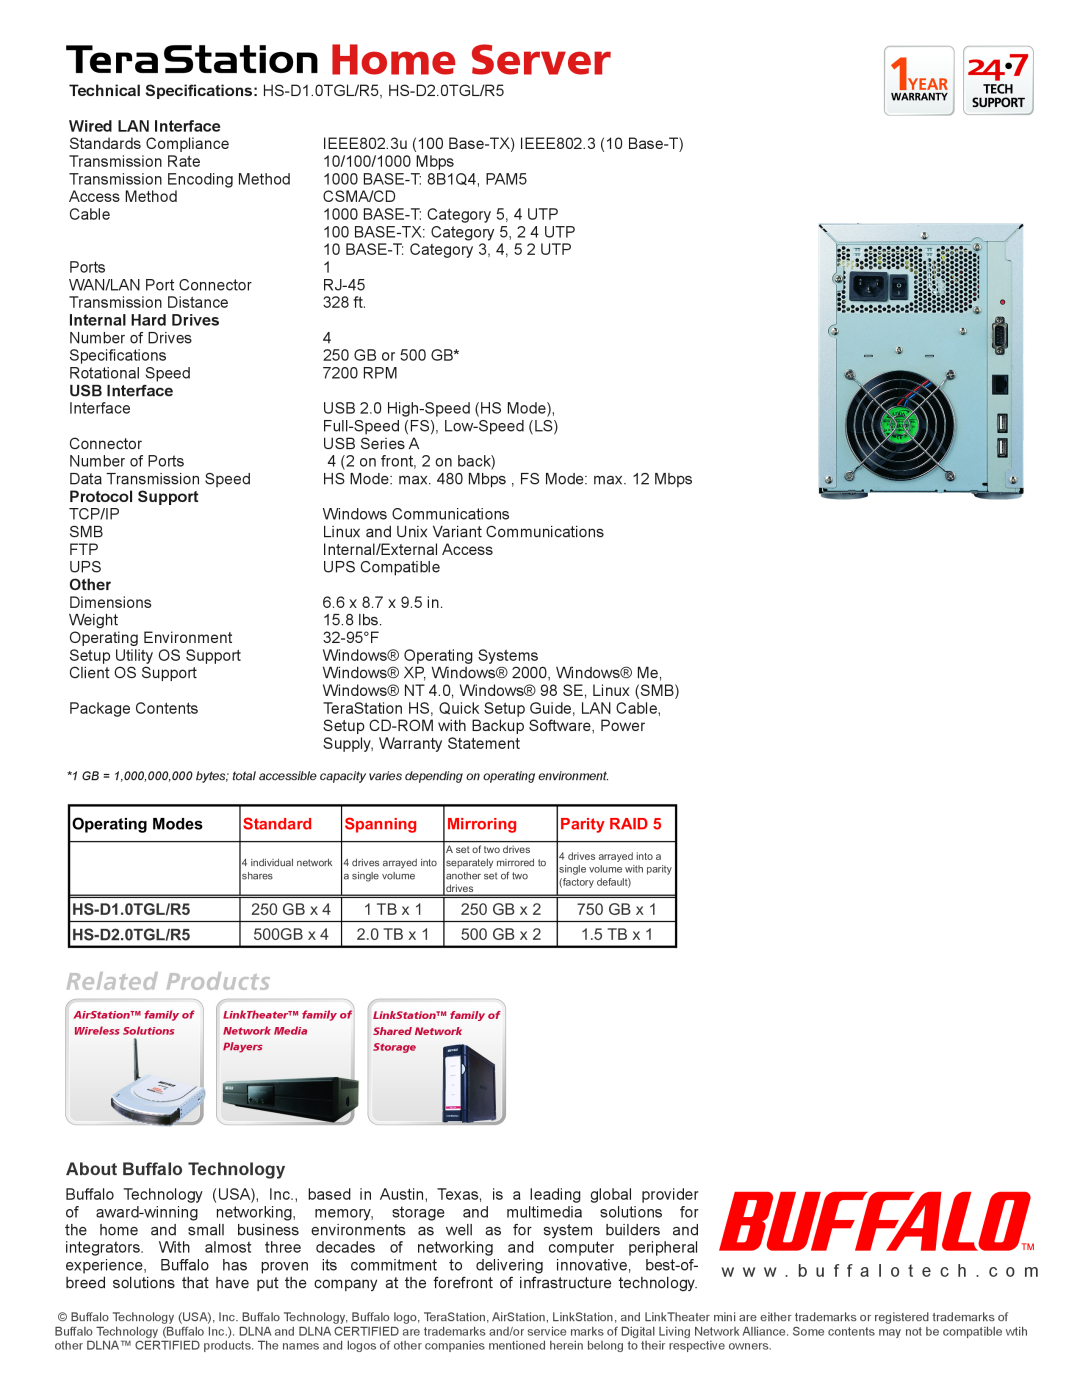 Buffalo Technology HS-D2.0TGL/R5 Home Server, About Buffalo Technology, w w w . b u f f a l o t e c h . c o m, Other, 1 TB 